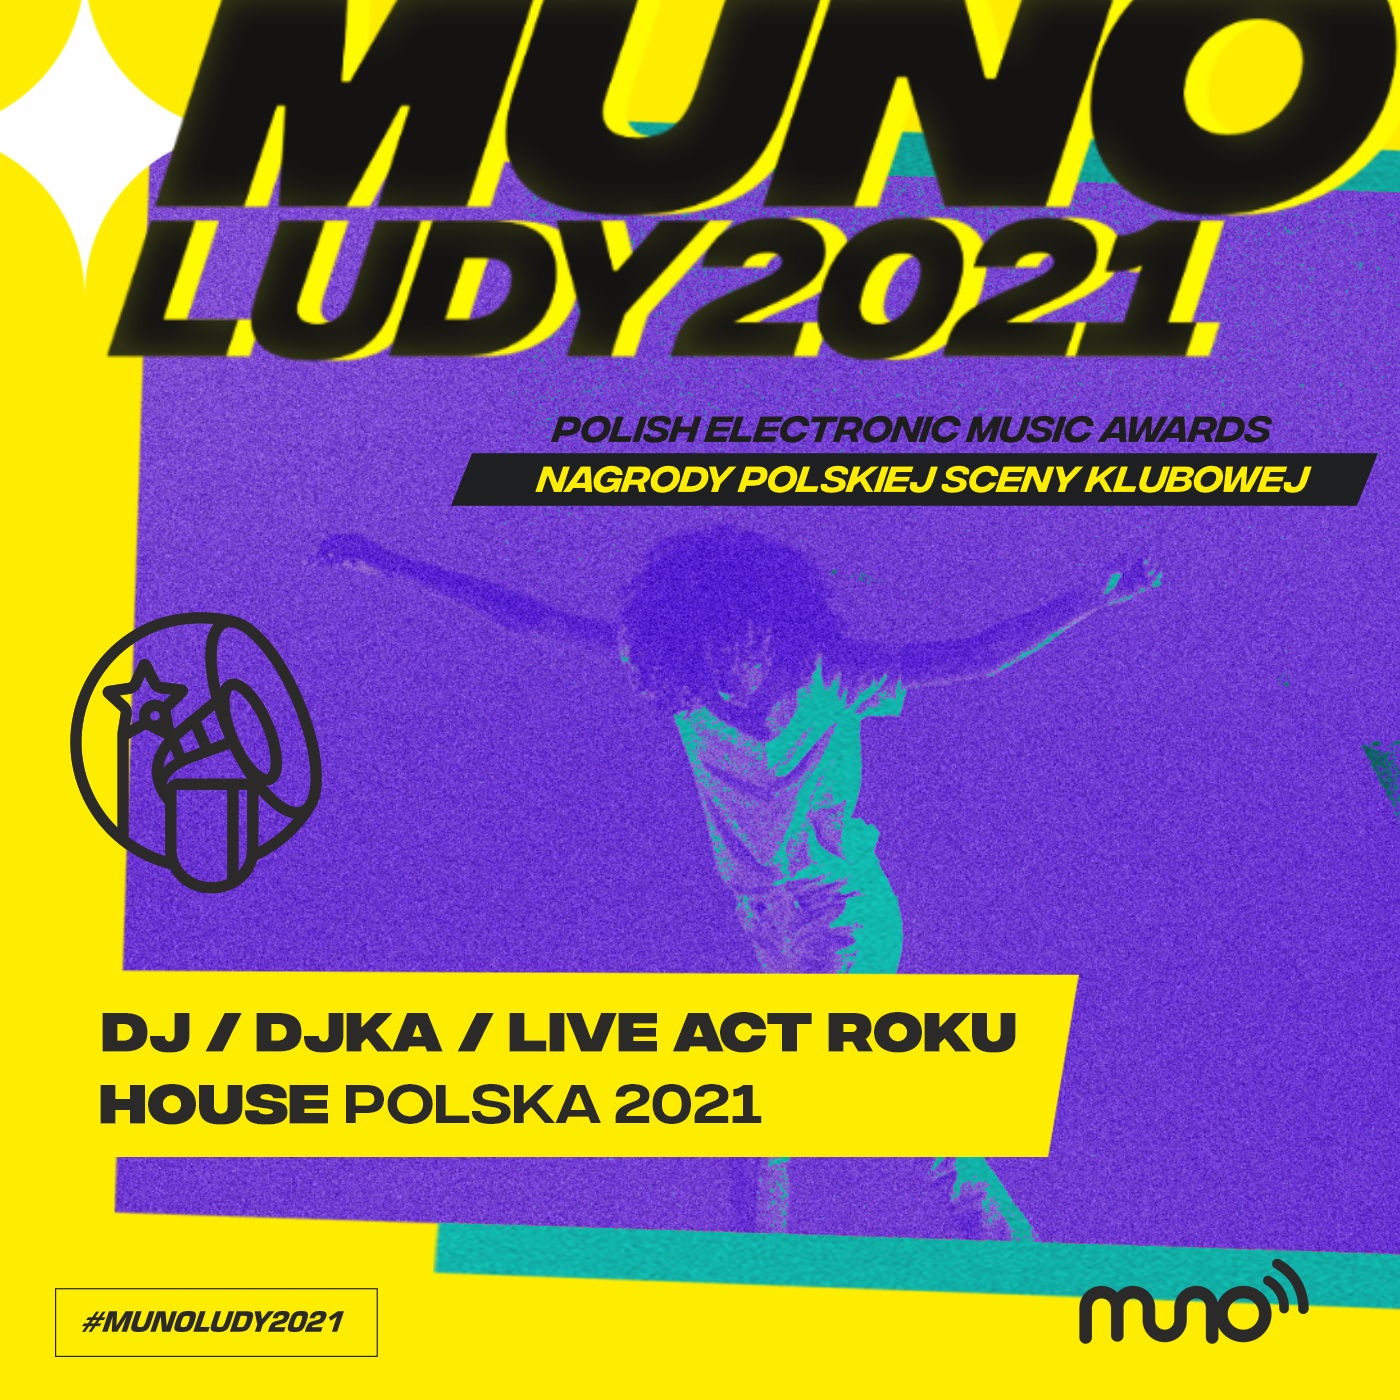 Munoludy 2021, DJ/DJ-KA/LIVE ACT ROKU HOUSE POLSKA